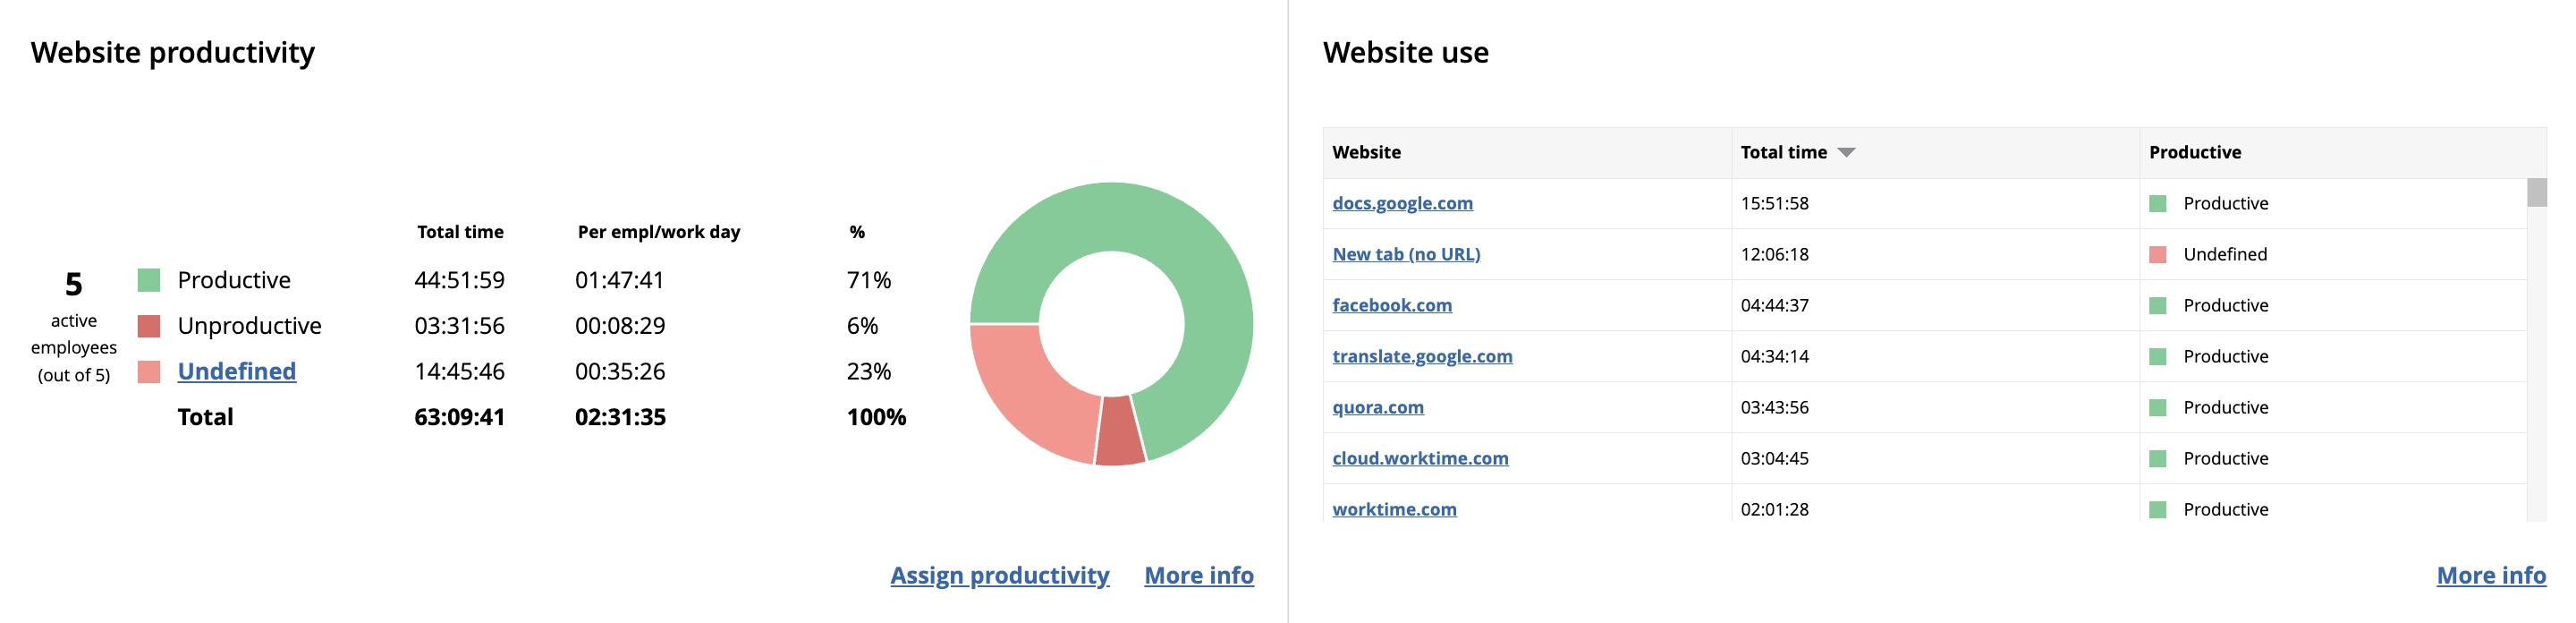 WorkTime - website productivity